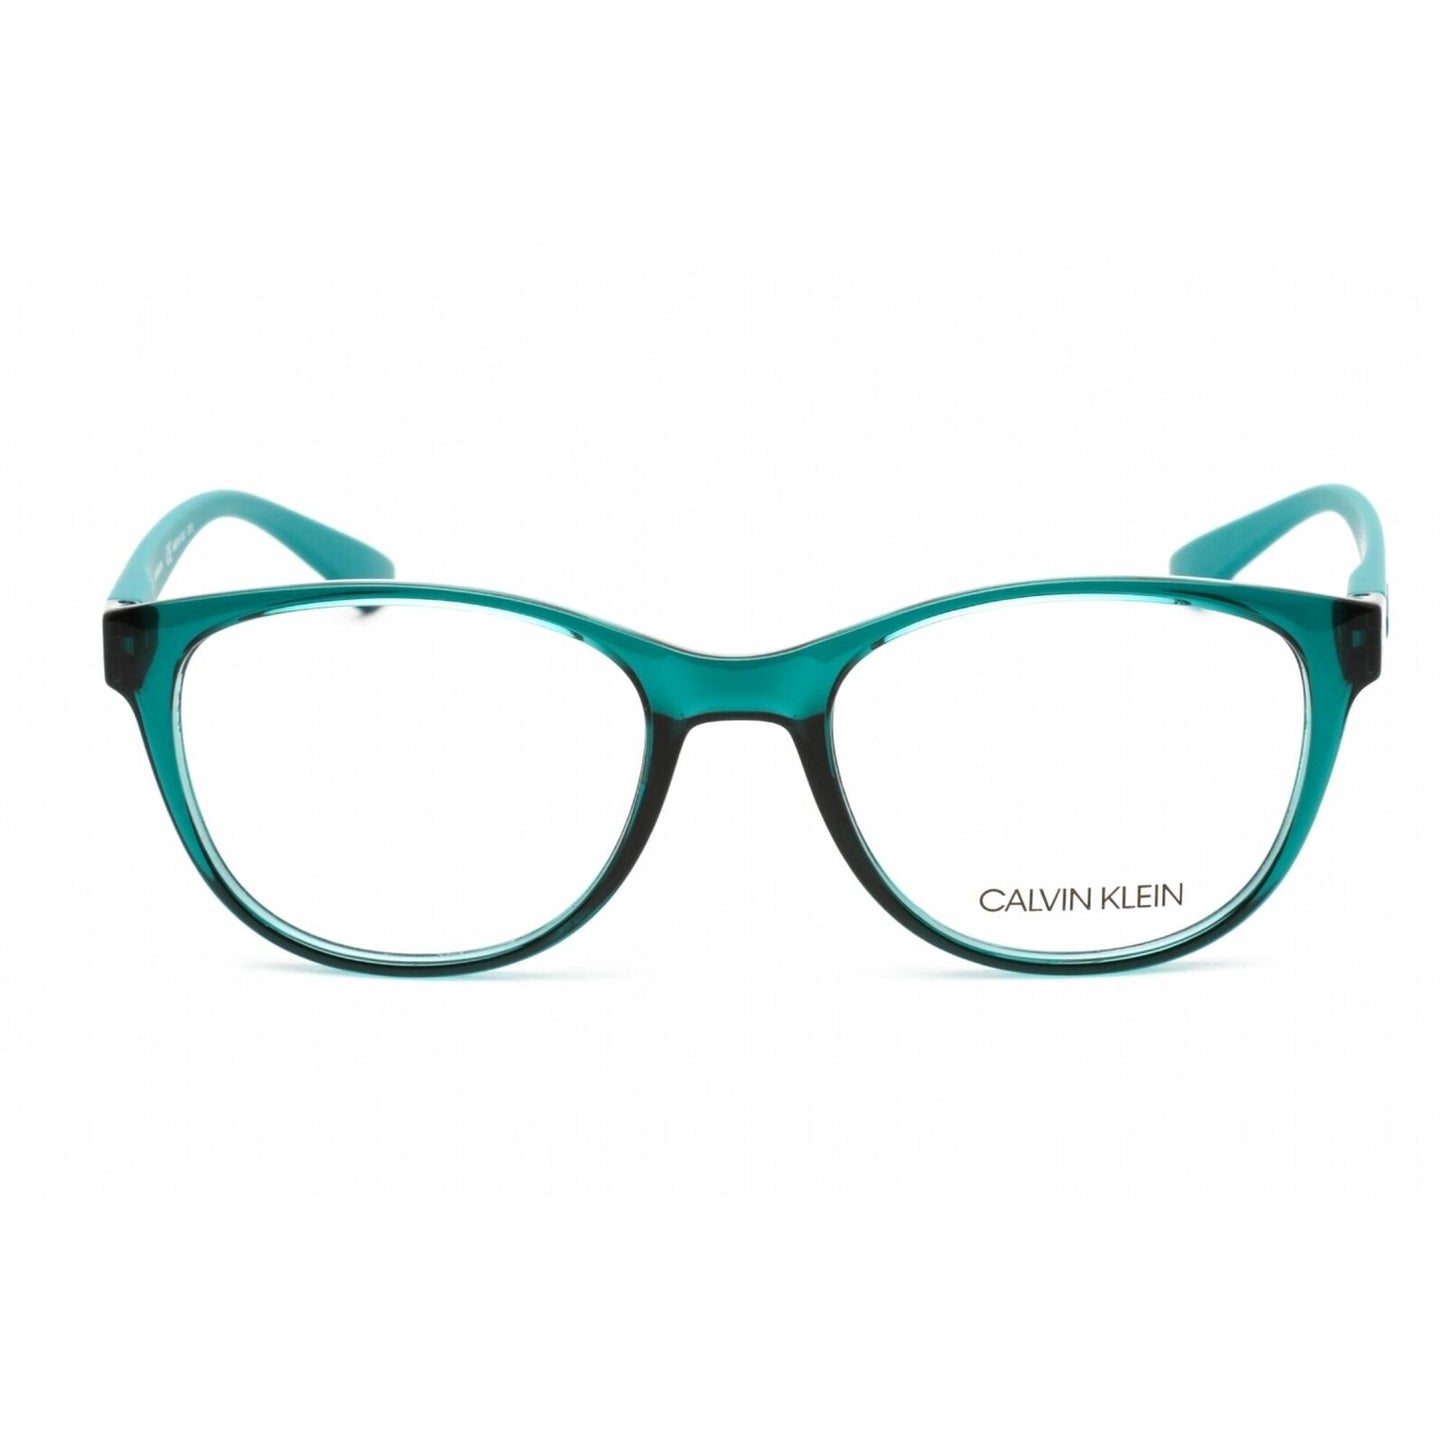 Calvin Klein CK19572-430-5218 52mm New Eyeglasses